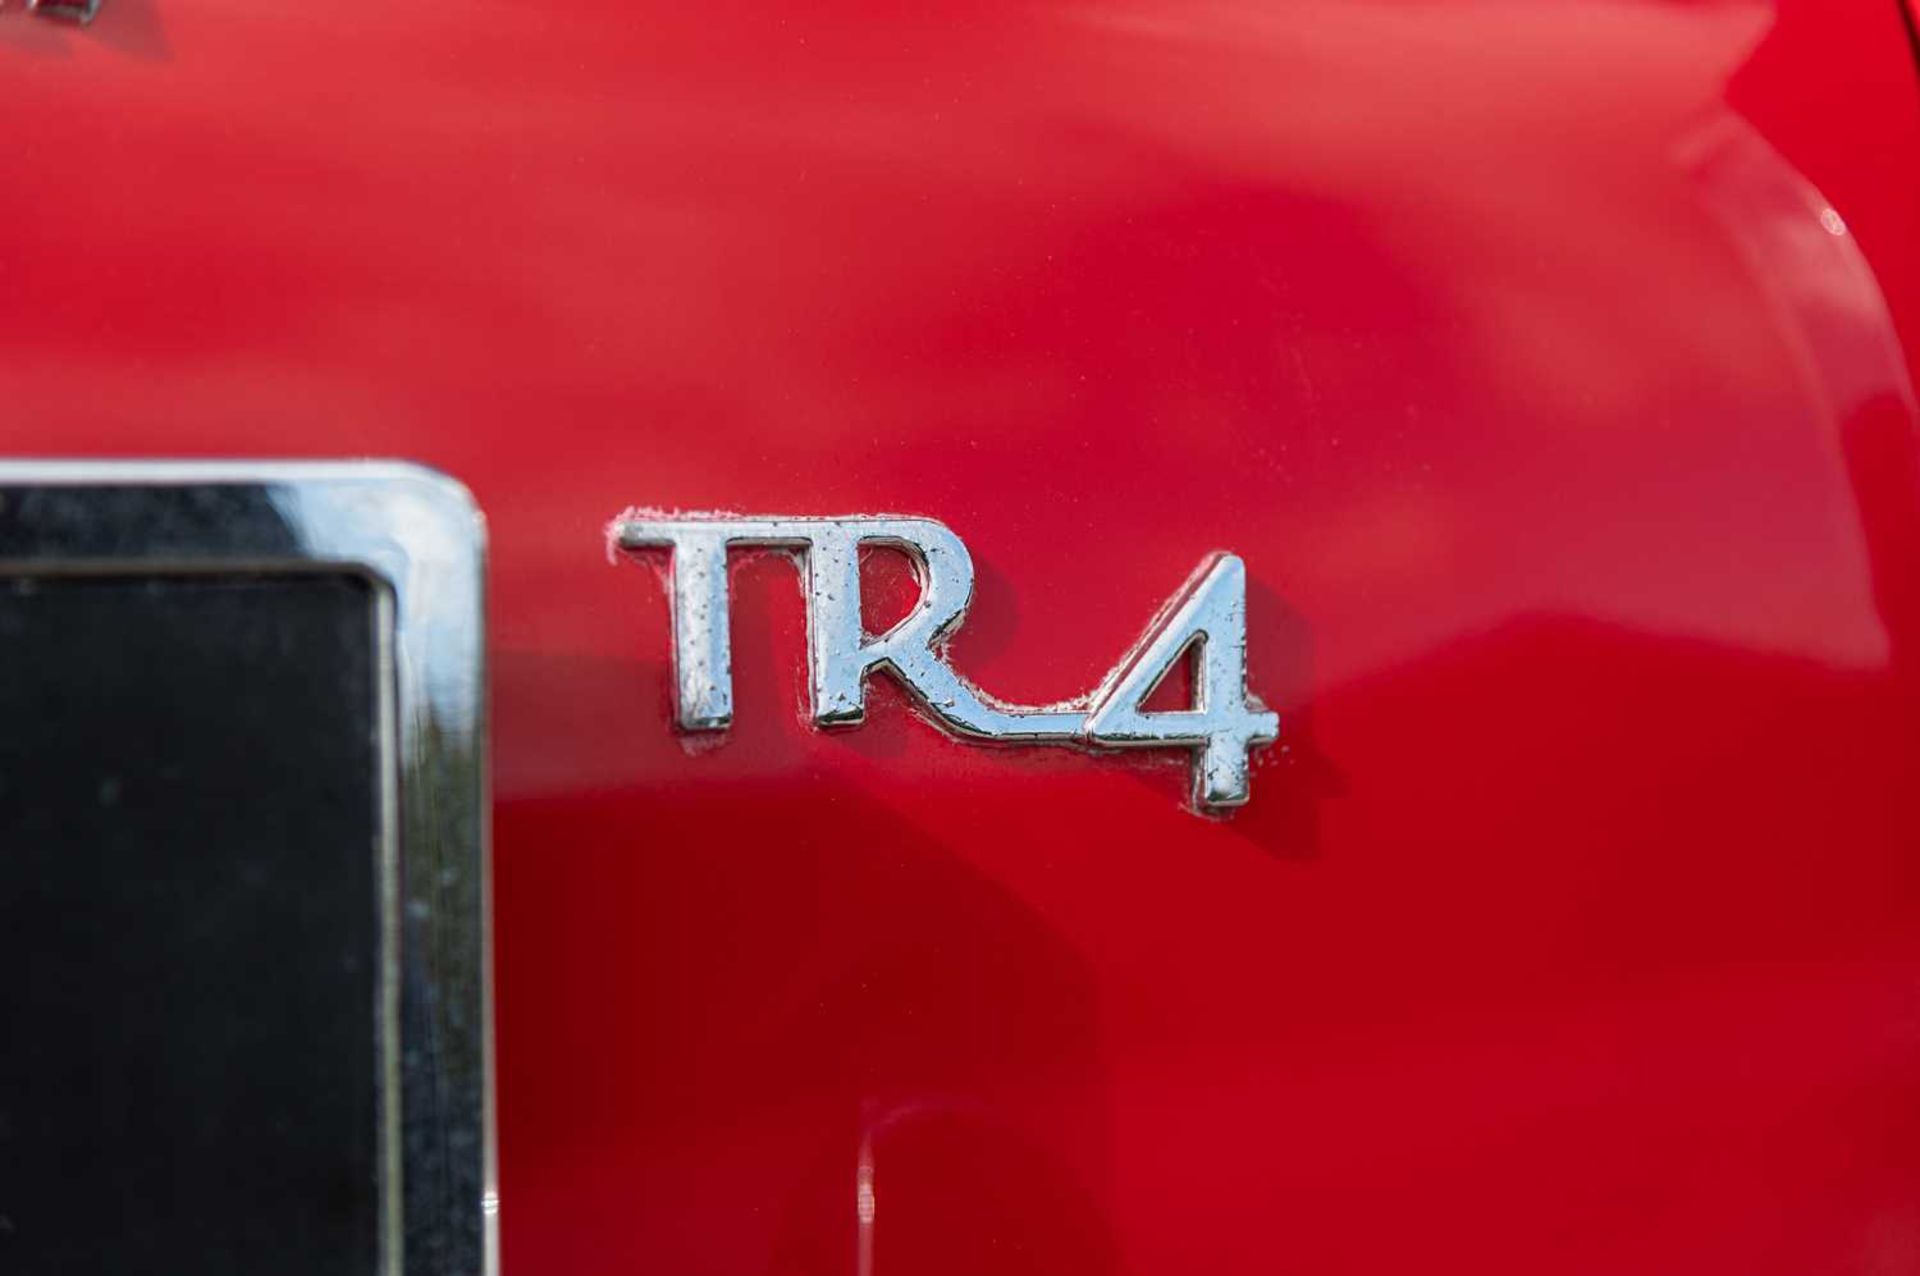 1962 Triumph TR4 - Image 20 of 72